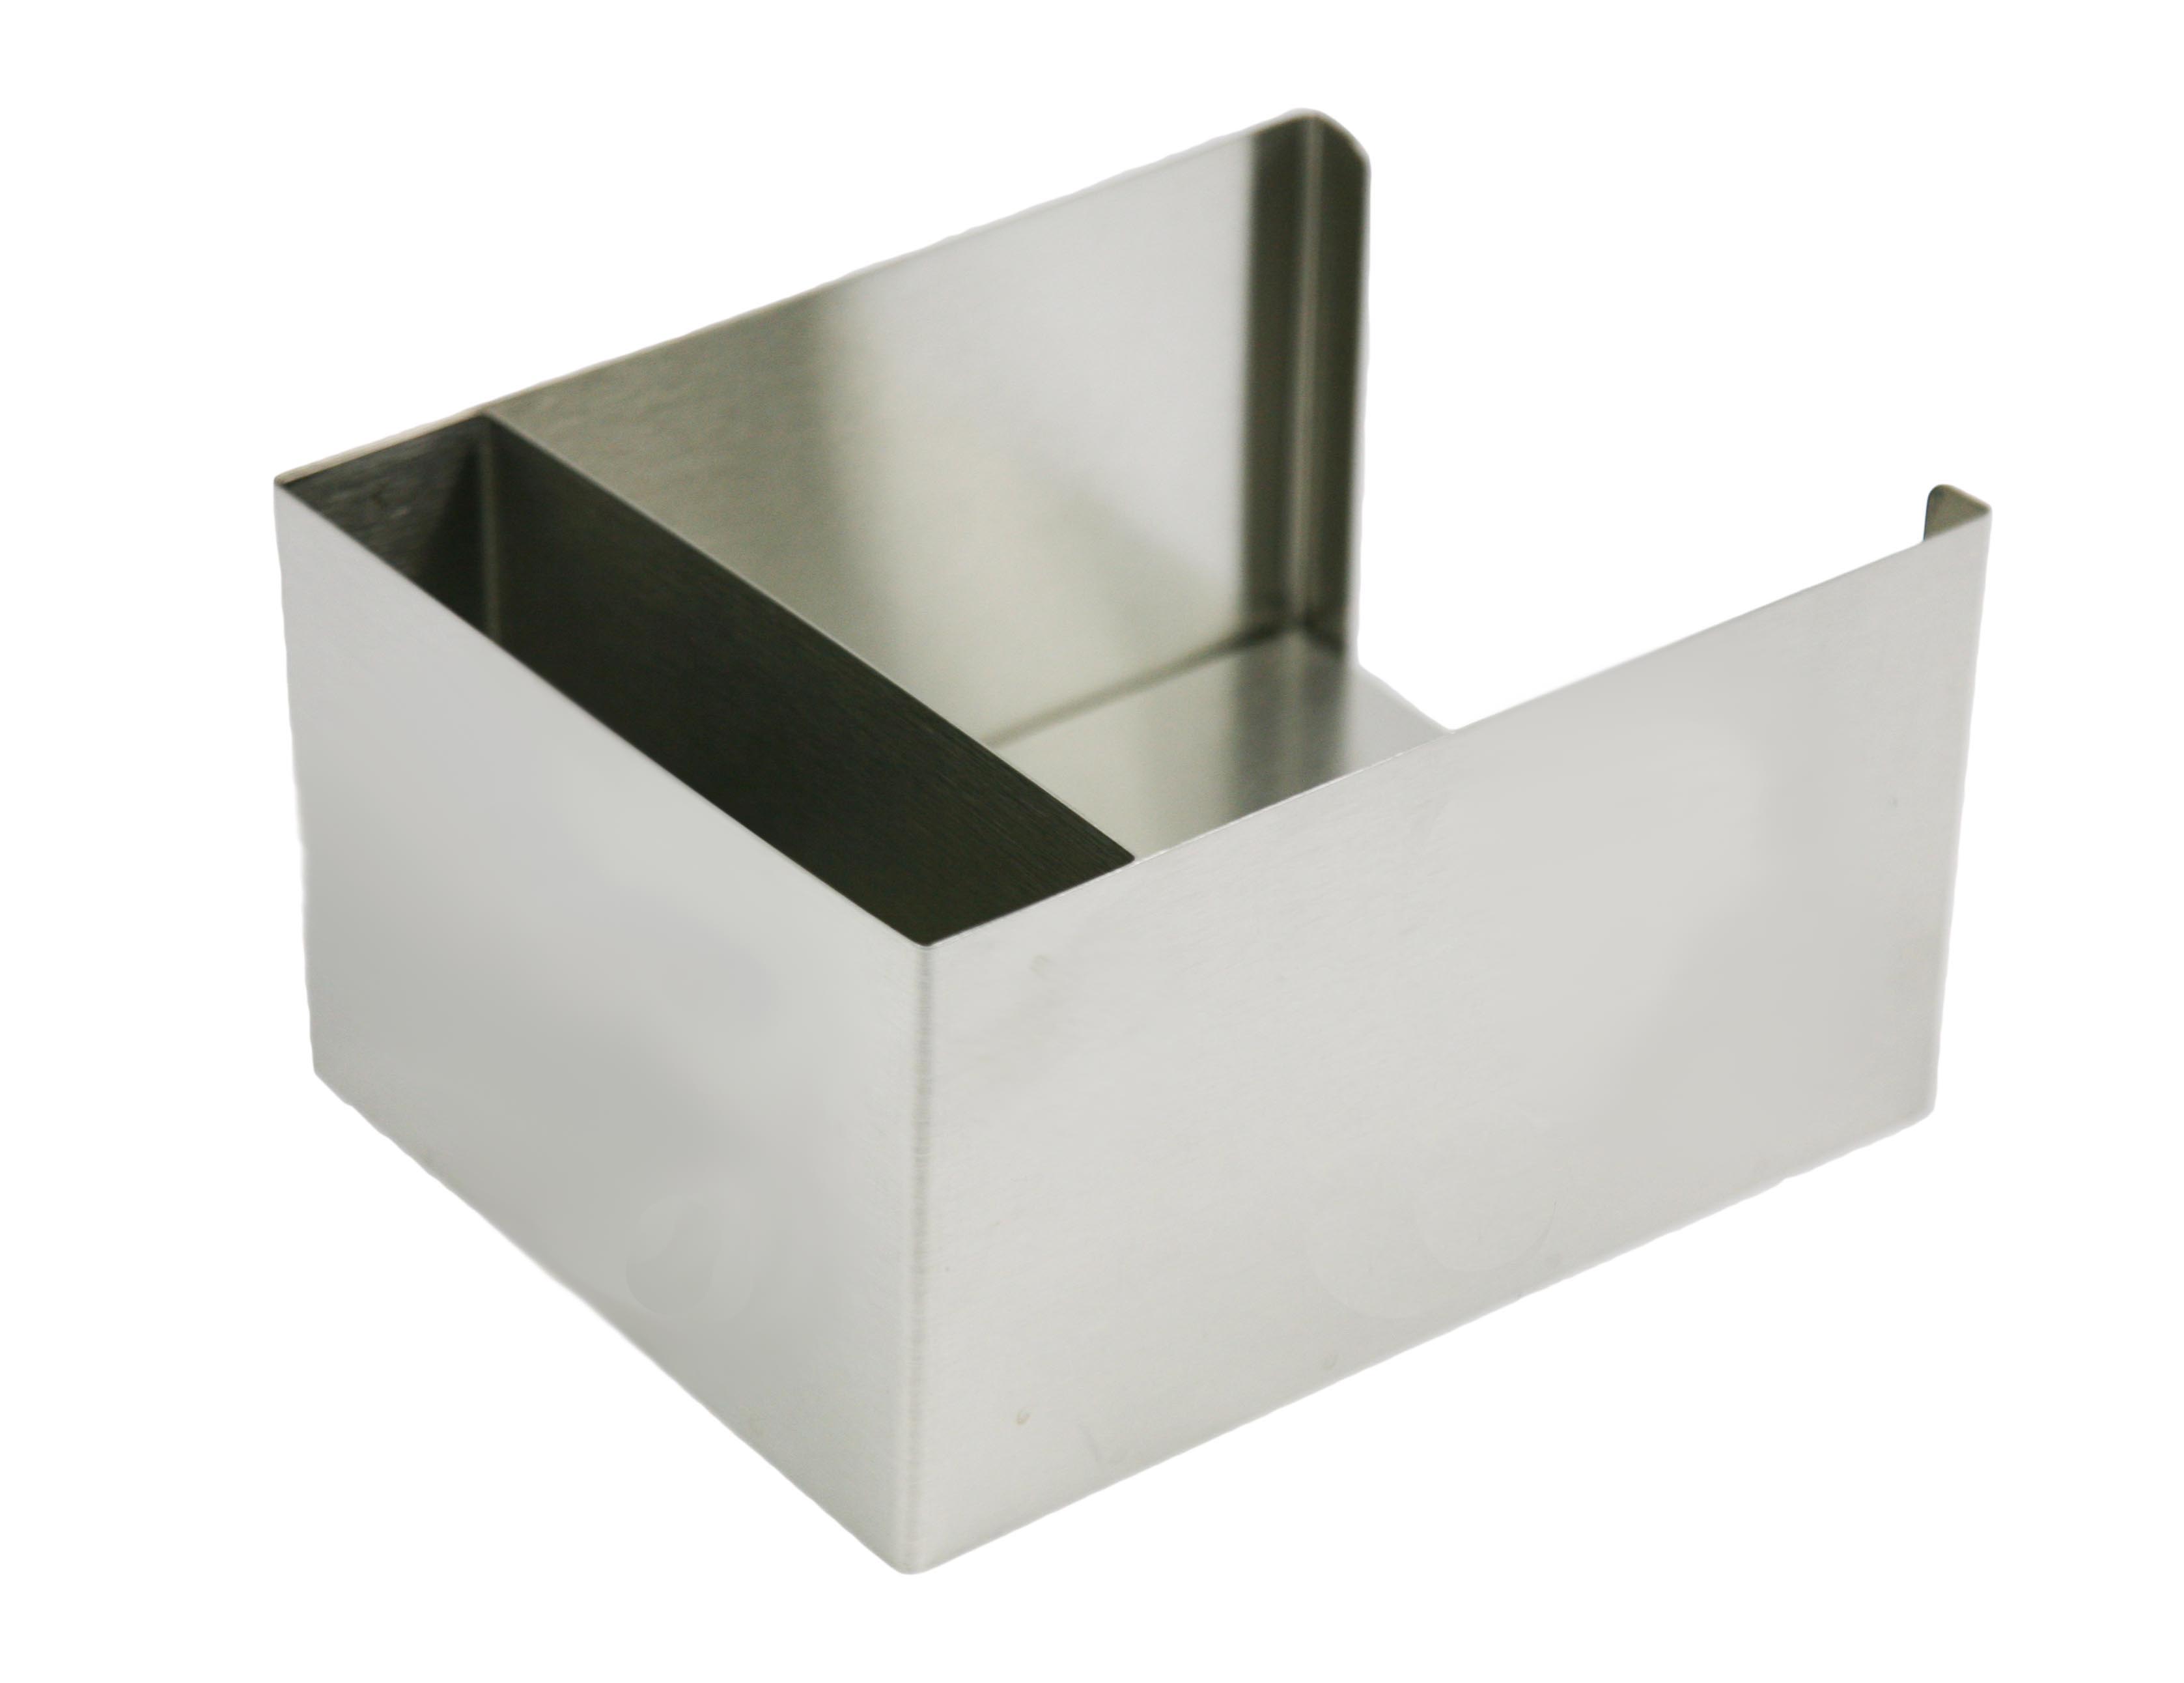 Caja de papel de seda de la caja del tejido de acero inoxidable de alta calidad de EB-TH41